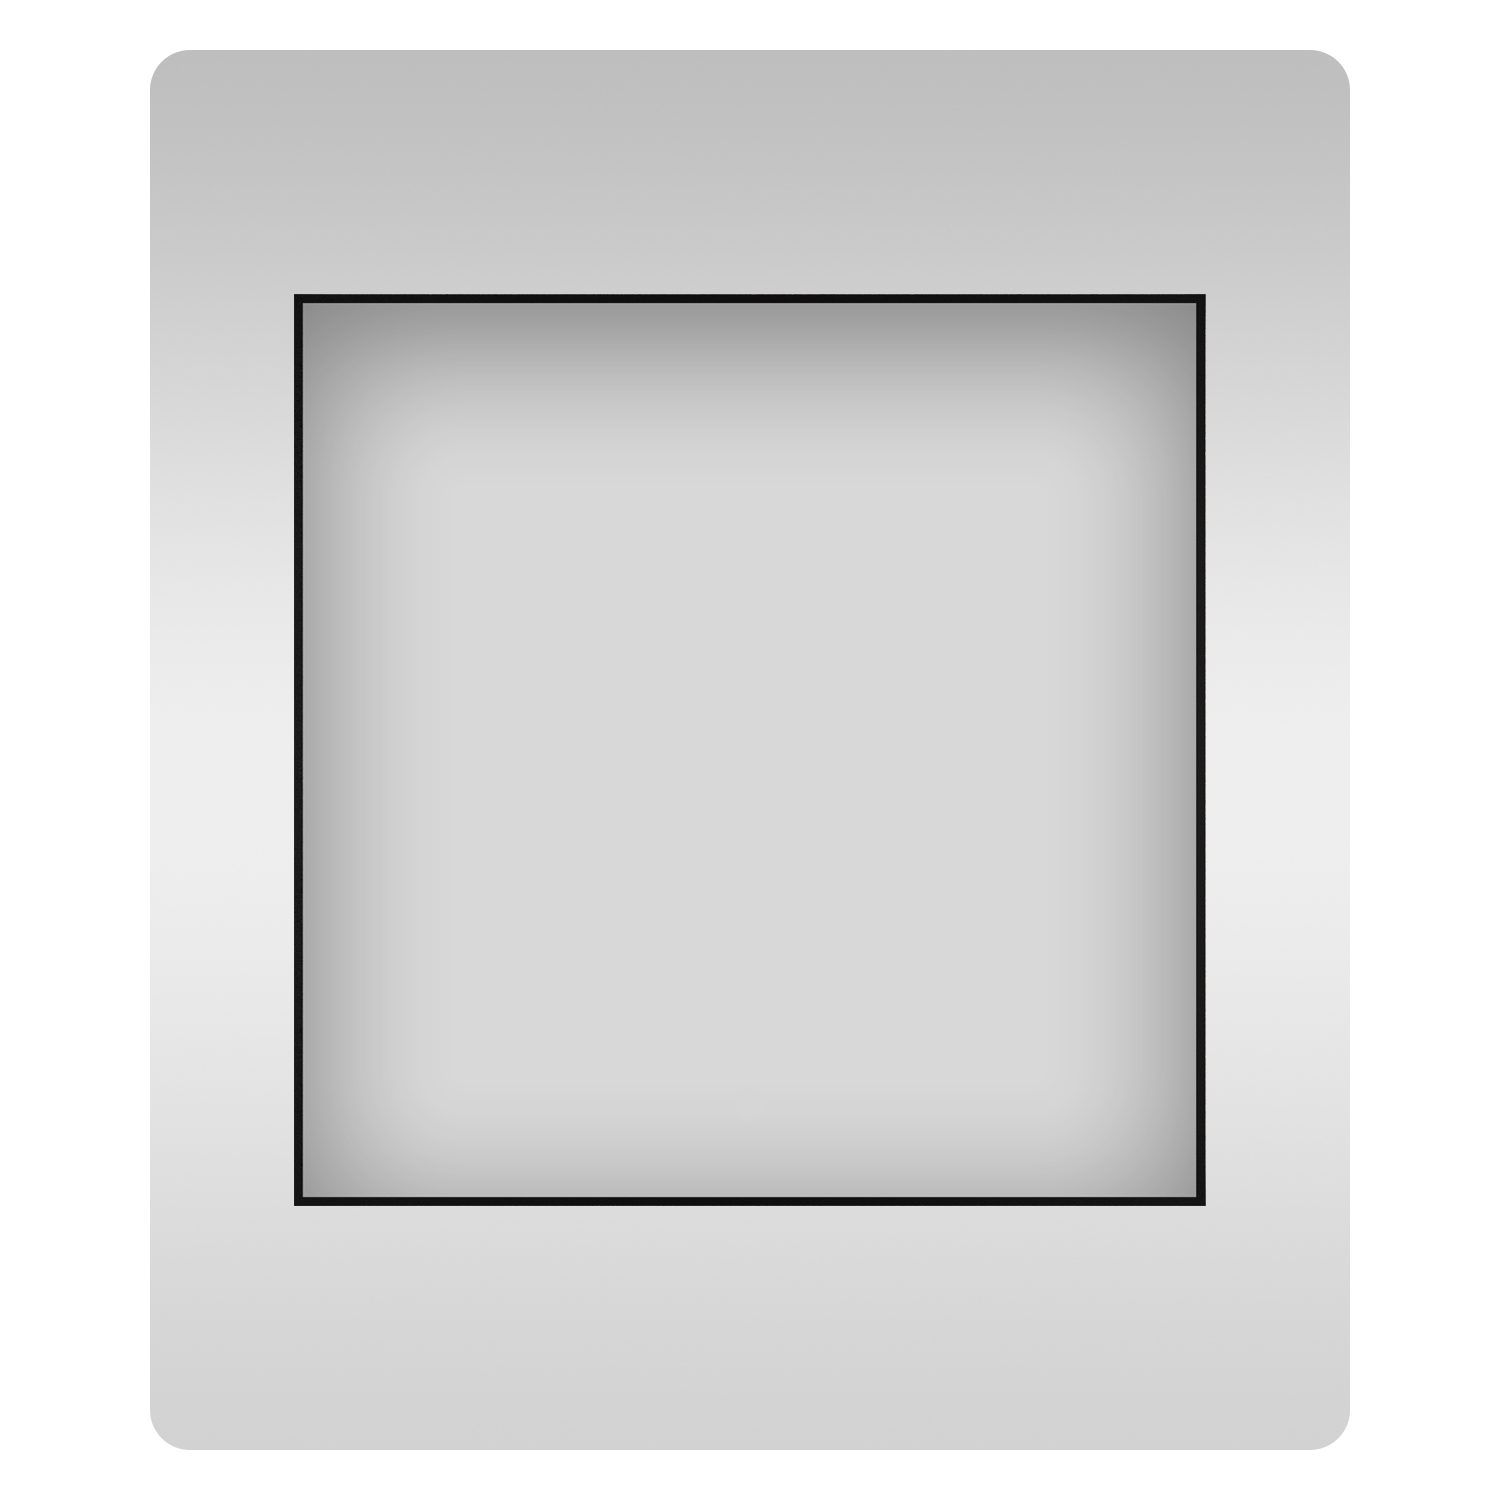 Влагостойкое квадратное зеркало Wellsee 7 Rays' Spectrum 172200290, 60х60 см